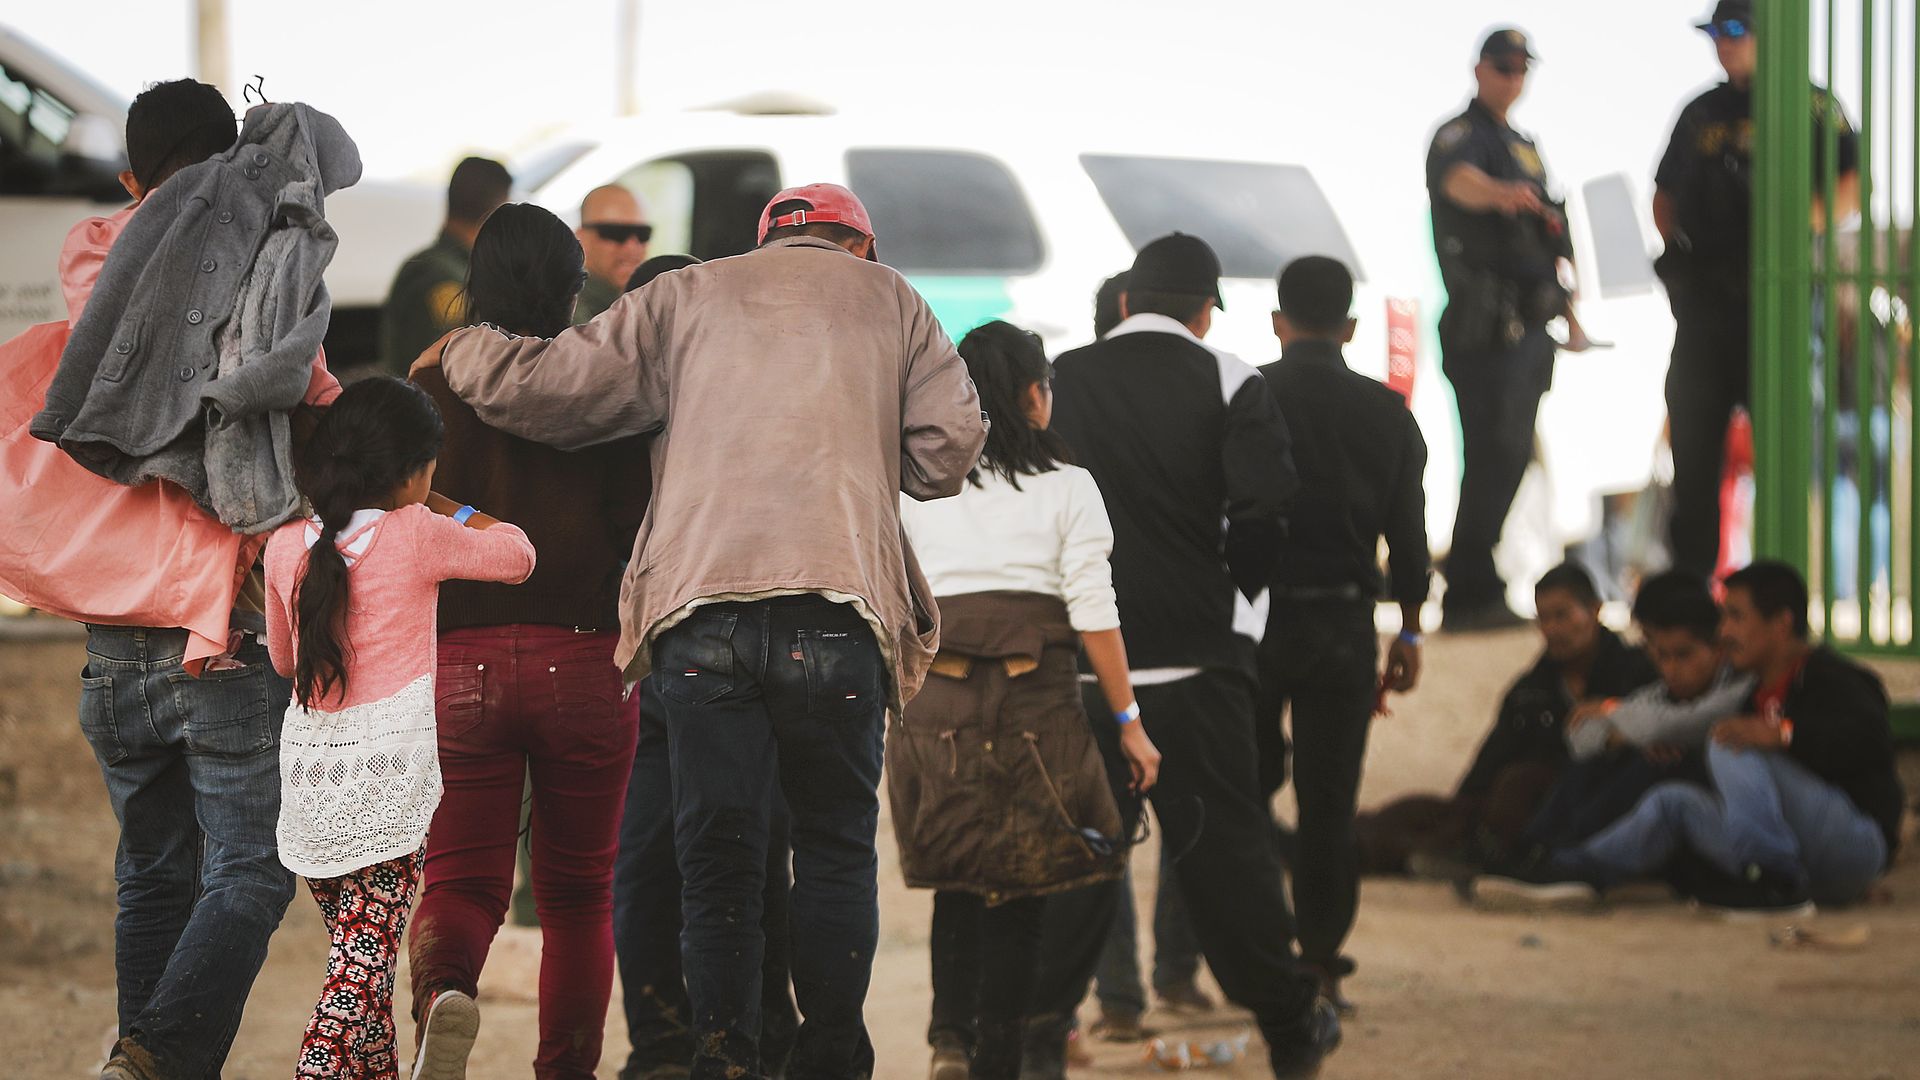 Migrants at a border patrol facility in Texas